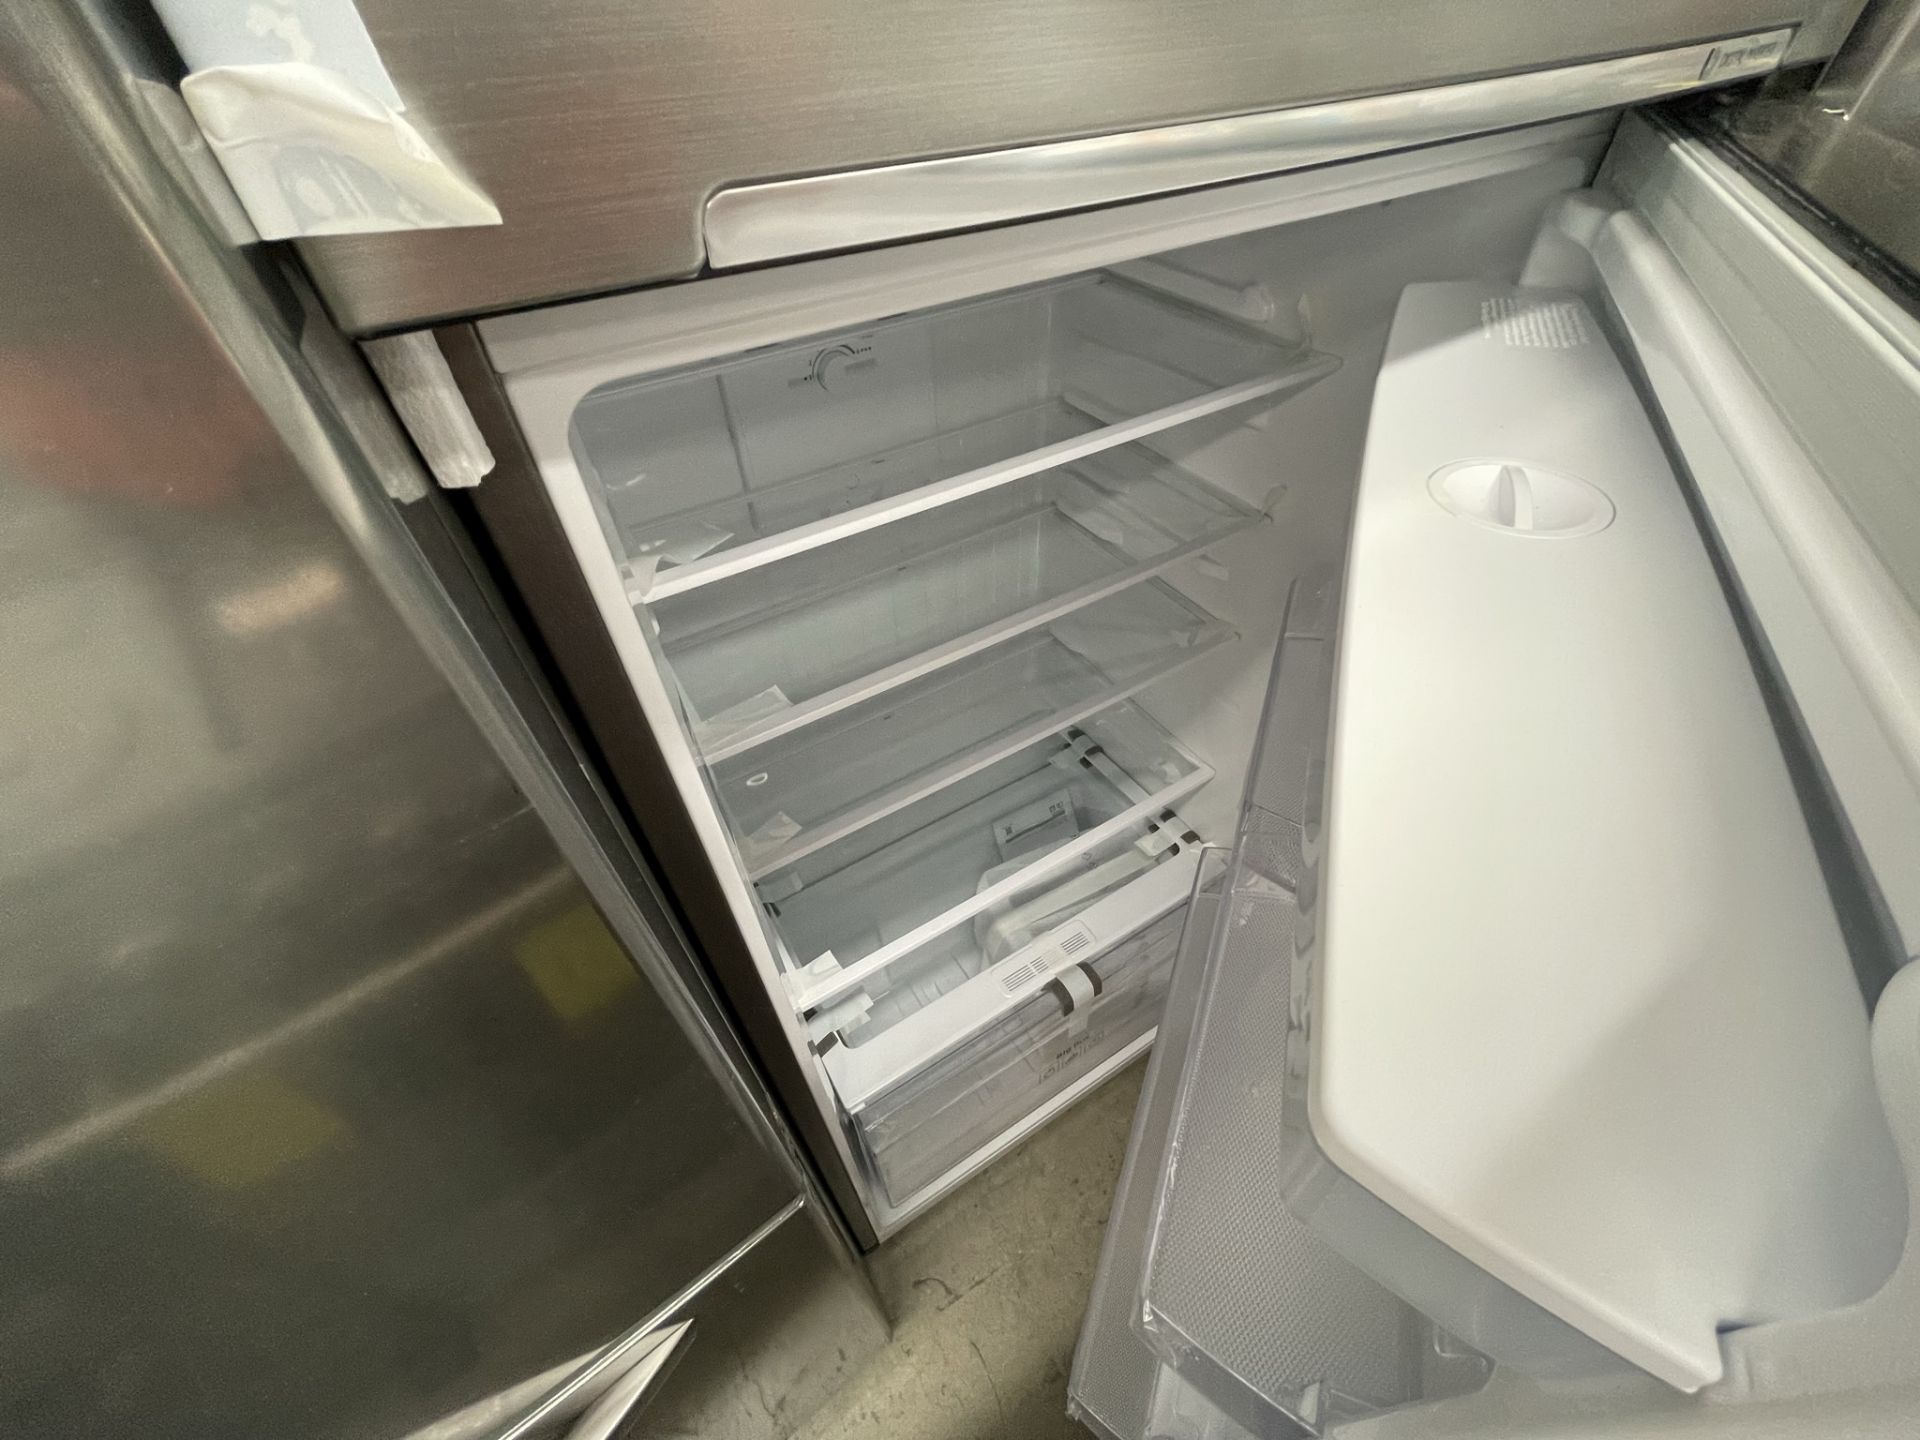 (EQUIPO NUEVO) 1 Refrigerador Con Dispensador De Agua Marca SAMSUNG, Modelo RT38A571JS9, Serie 9015 - Image 7 of 8